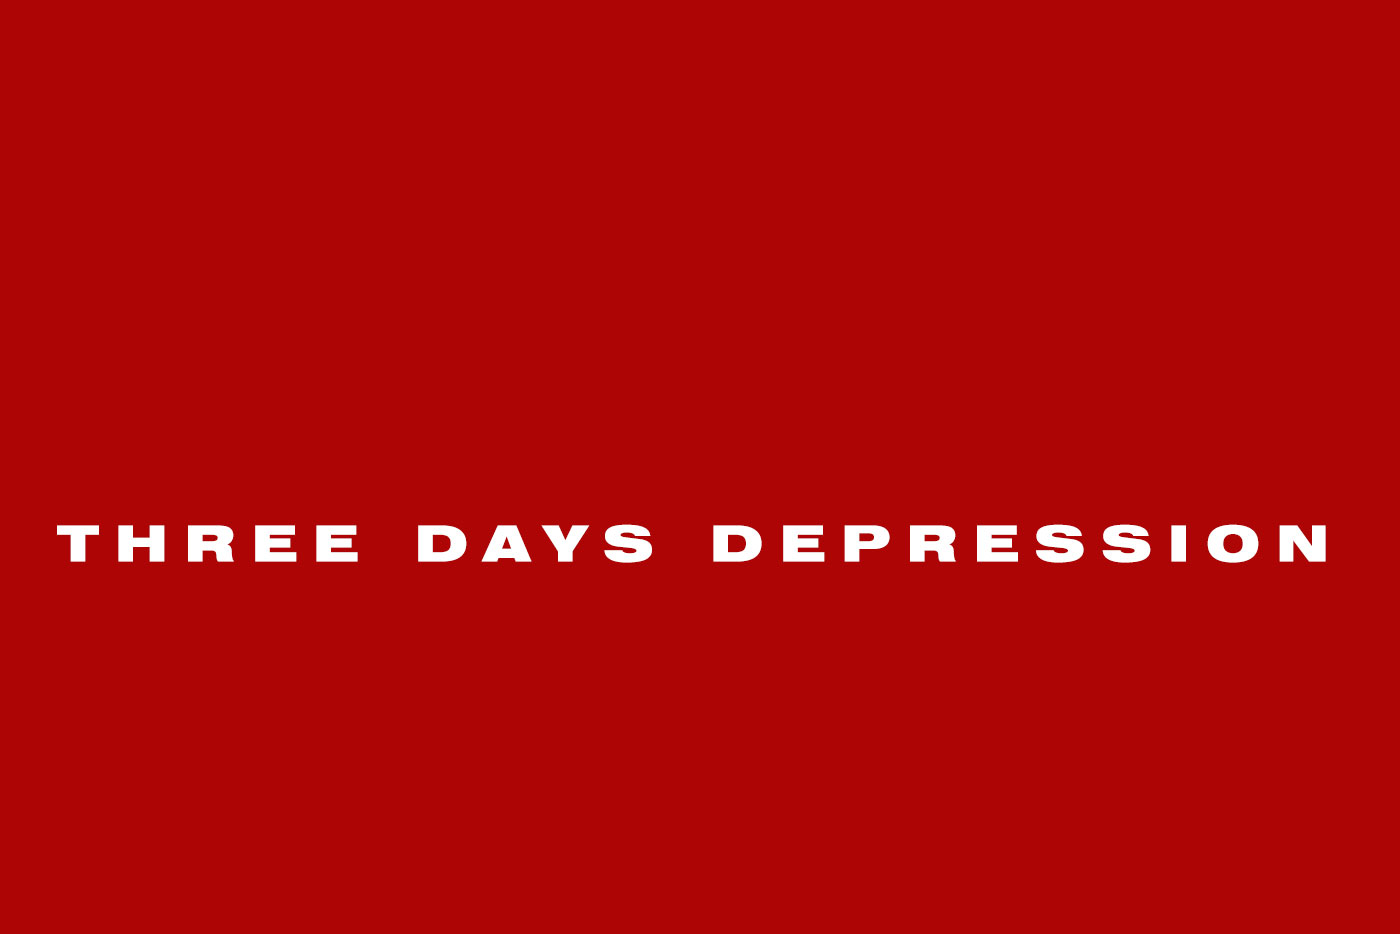 Three days depression